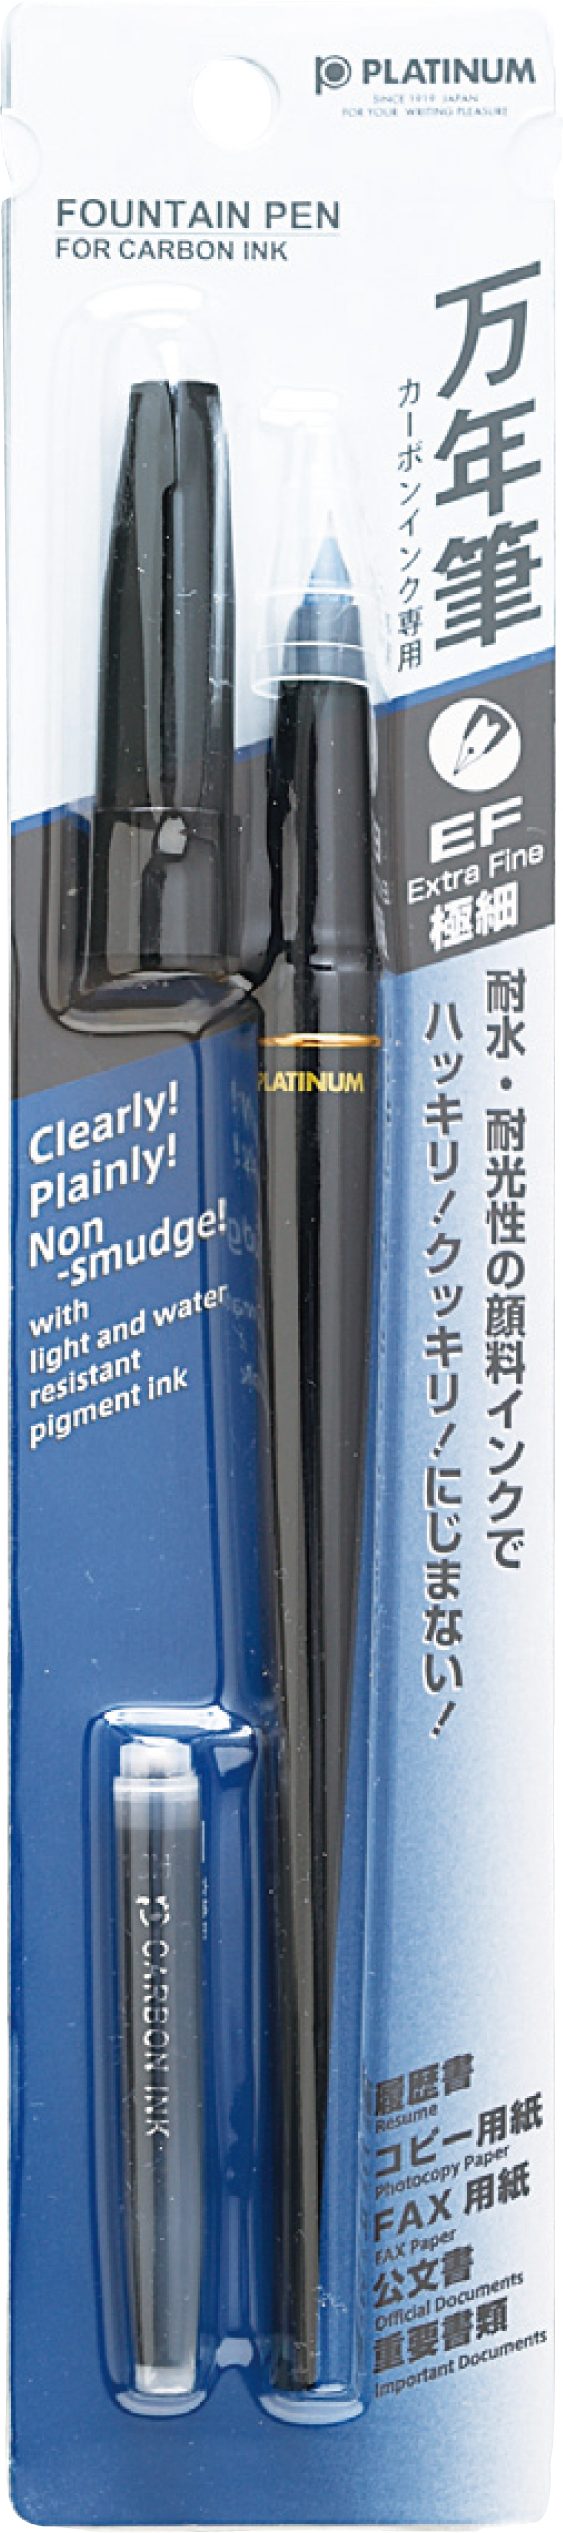 Carbon pen designated fountain pen